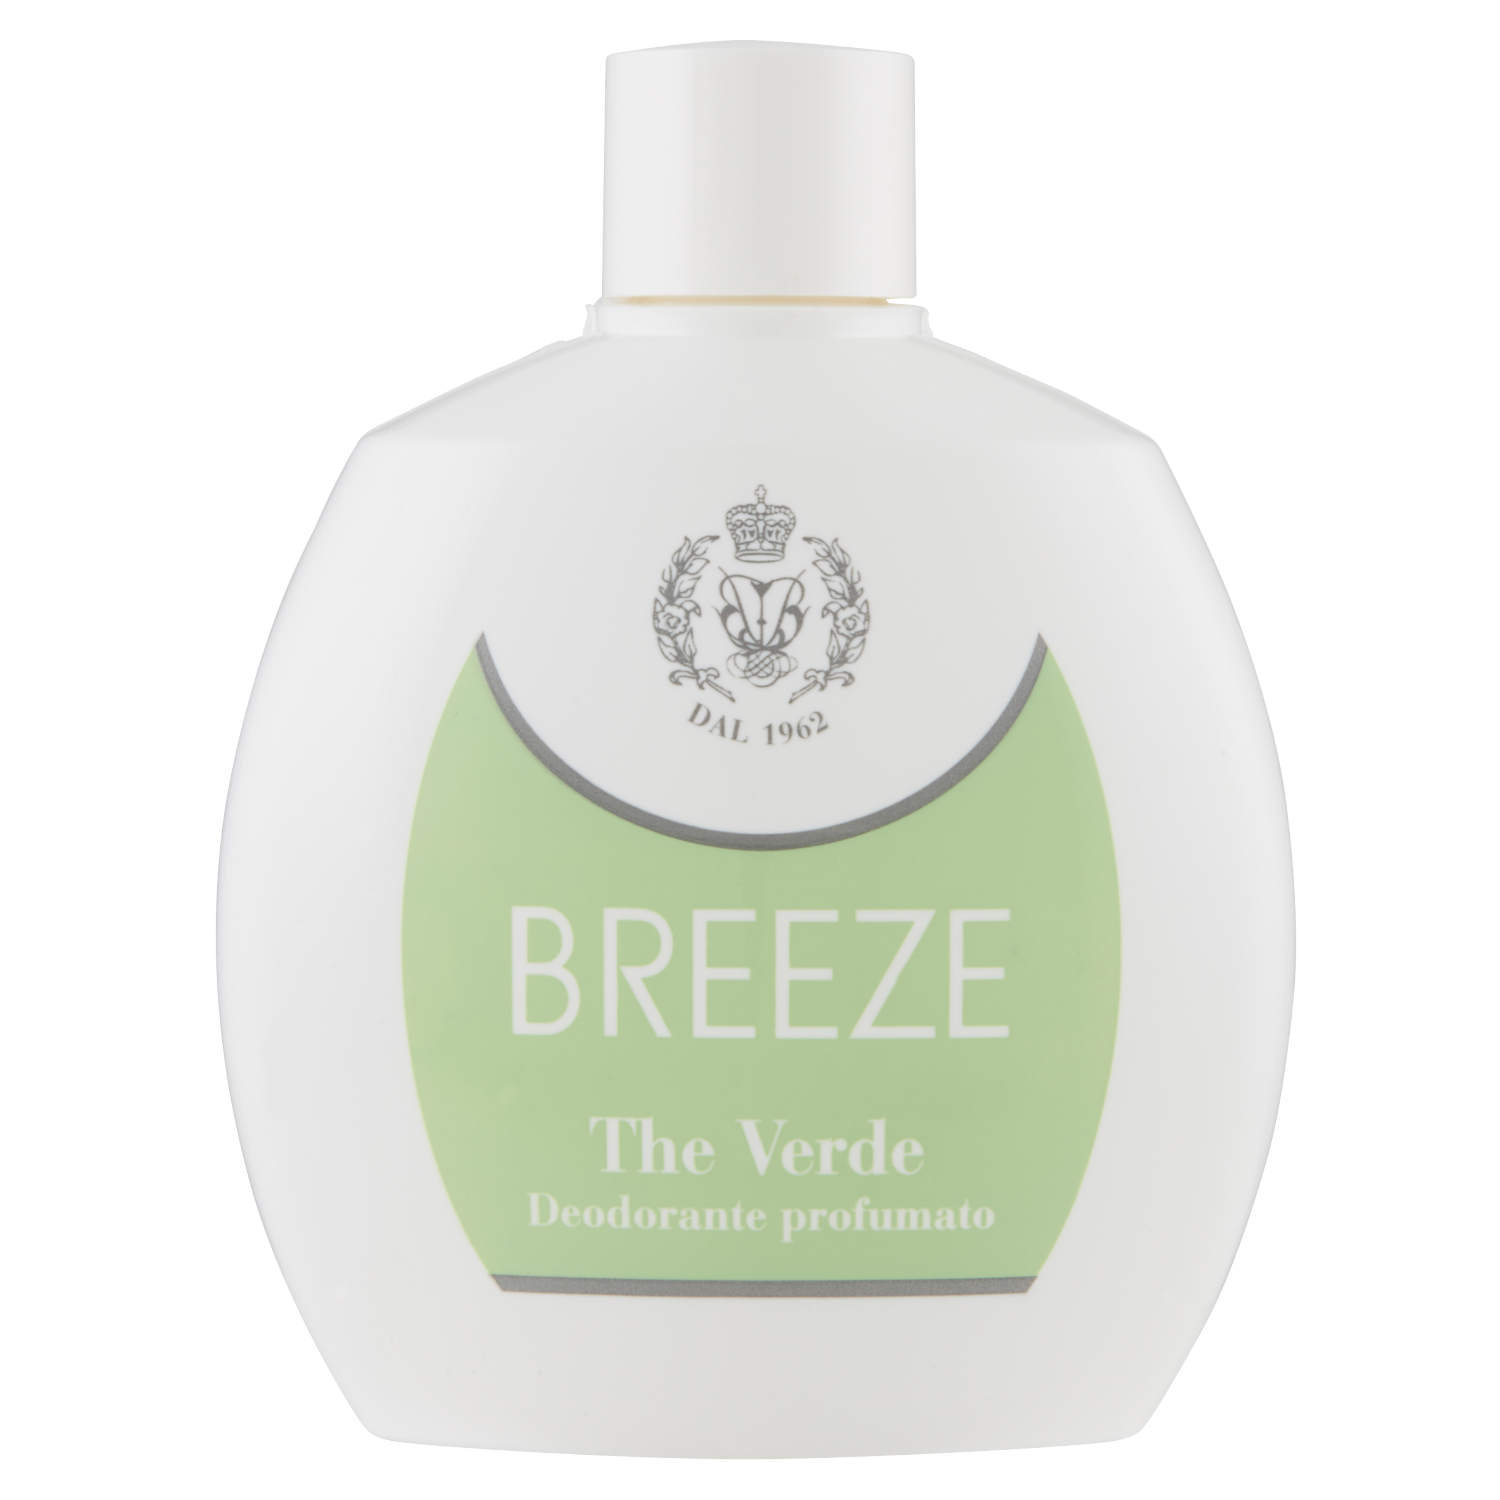 Breeze The Verde Deodorante profumato 100ml